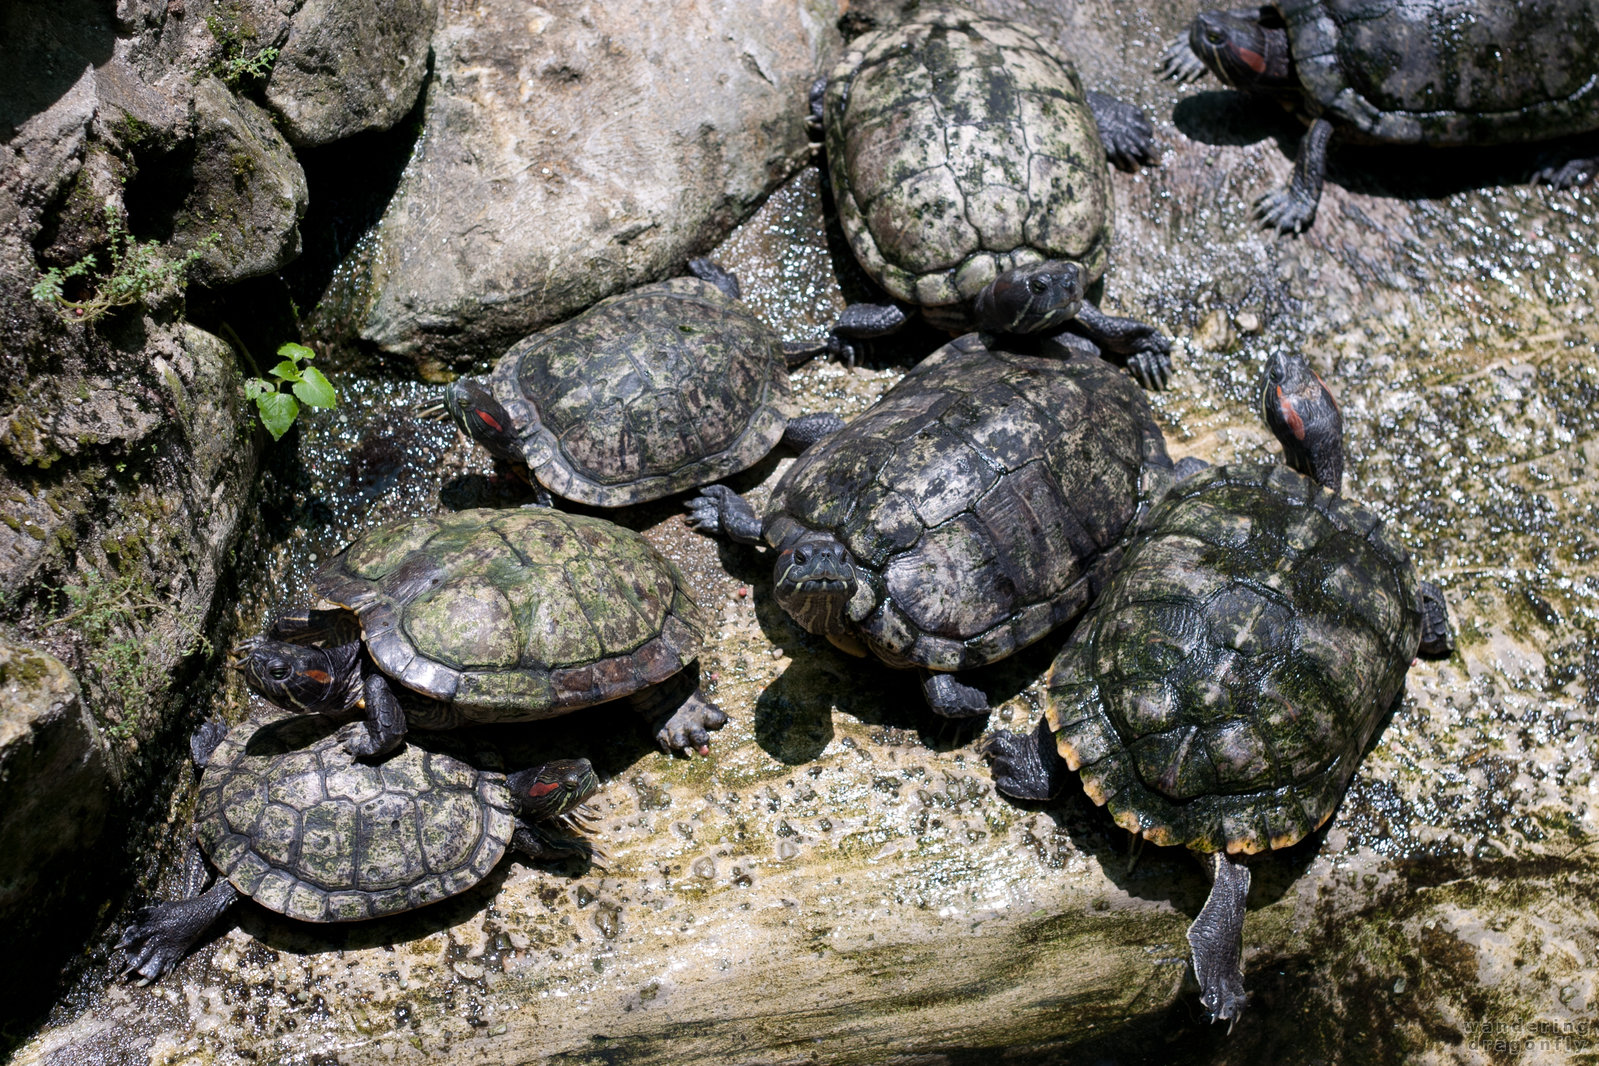 Turtles on the rock -- turtle